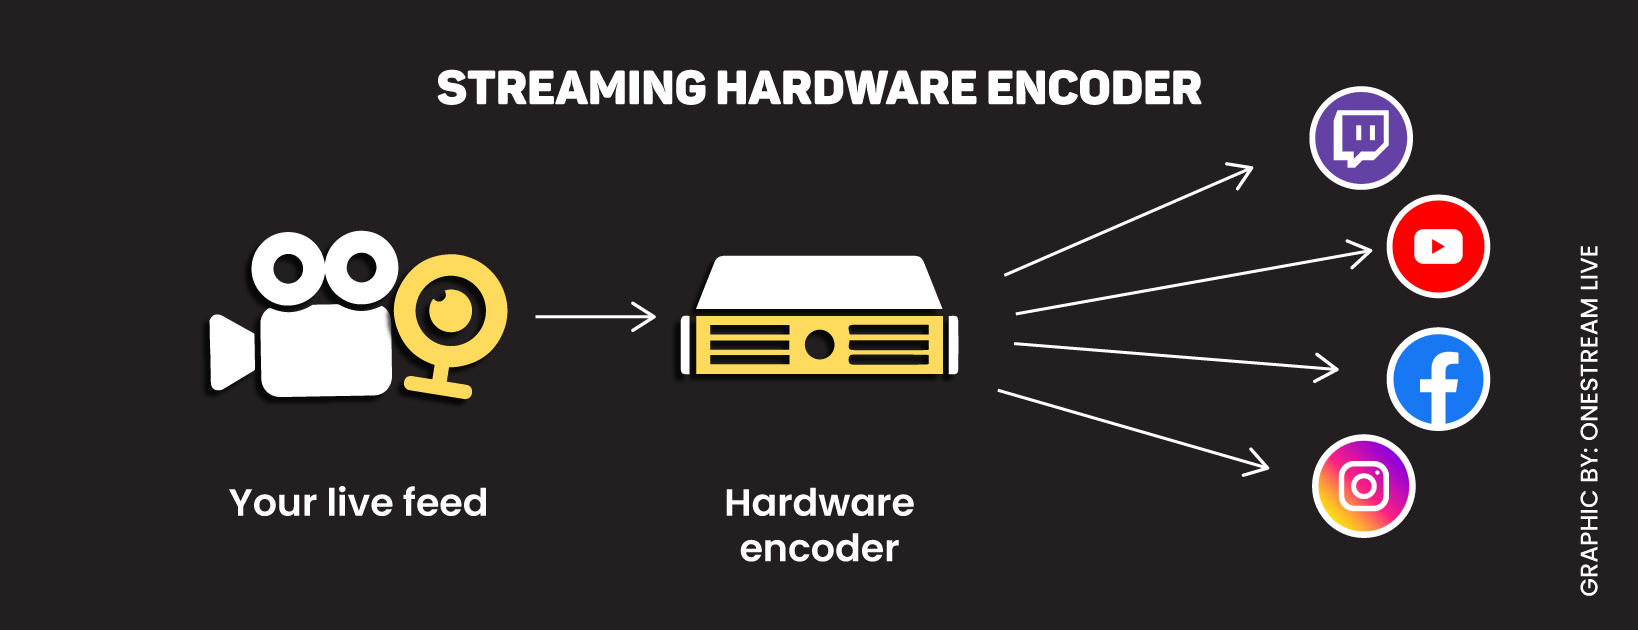 Multistreaming hardware encoder